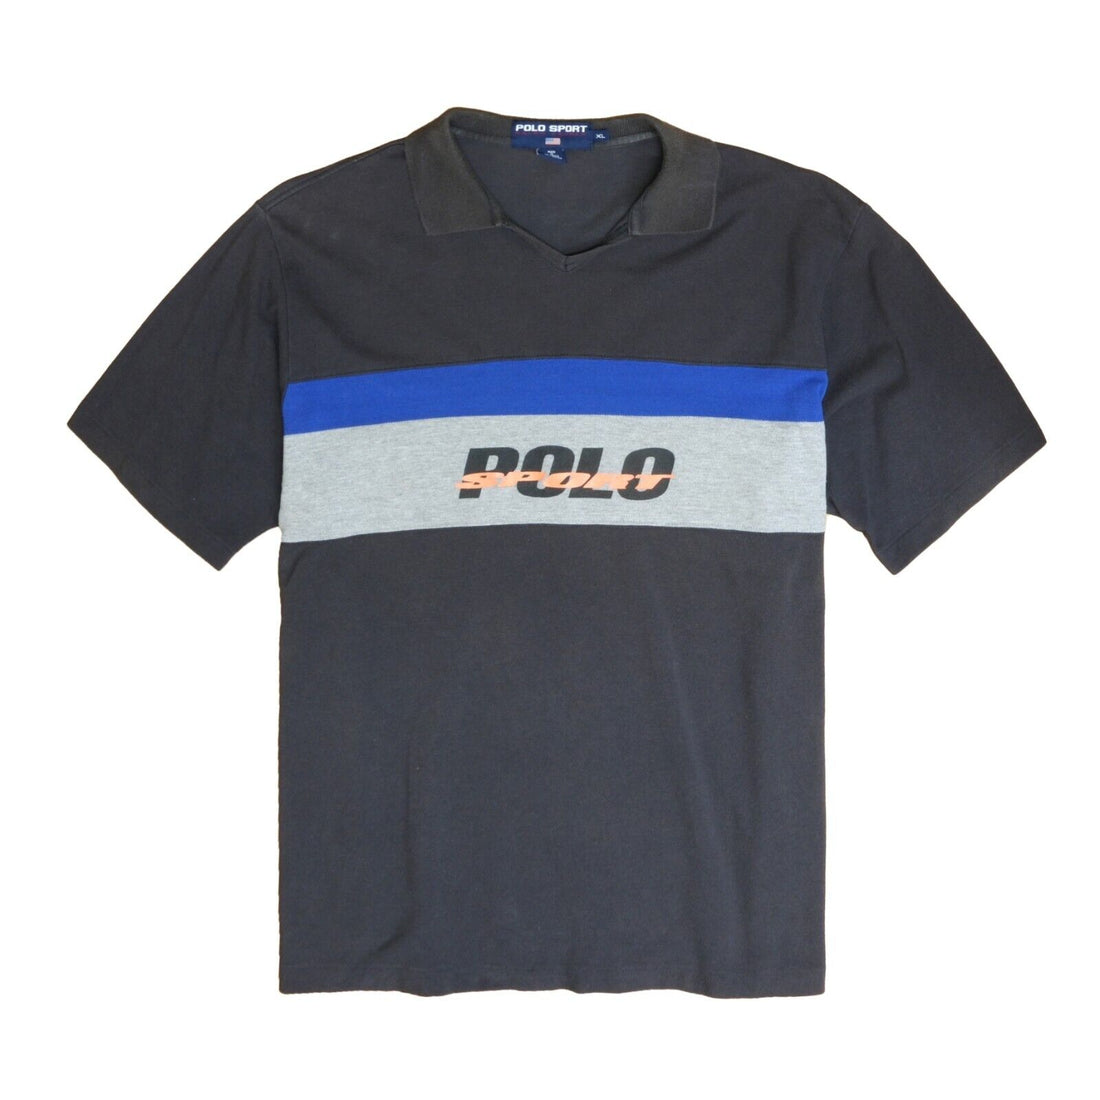 Vintage Polo Sport Ralph Lauren Rugby T-Shirt Size XL Black